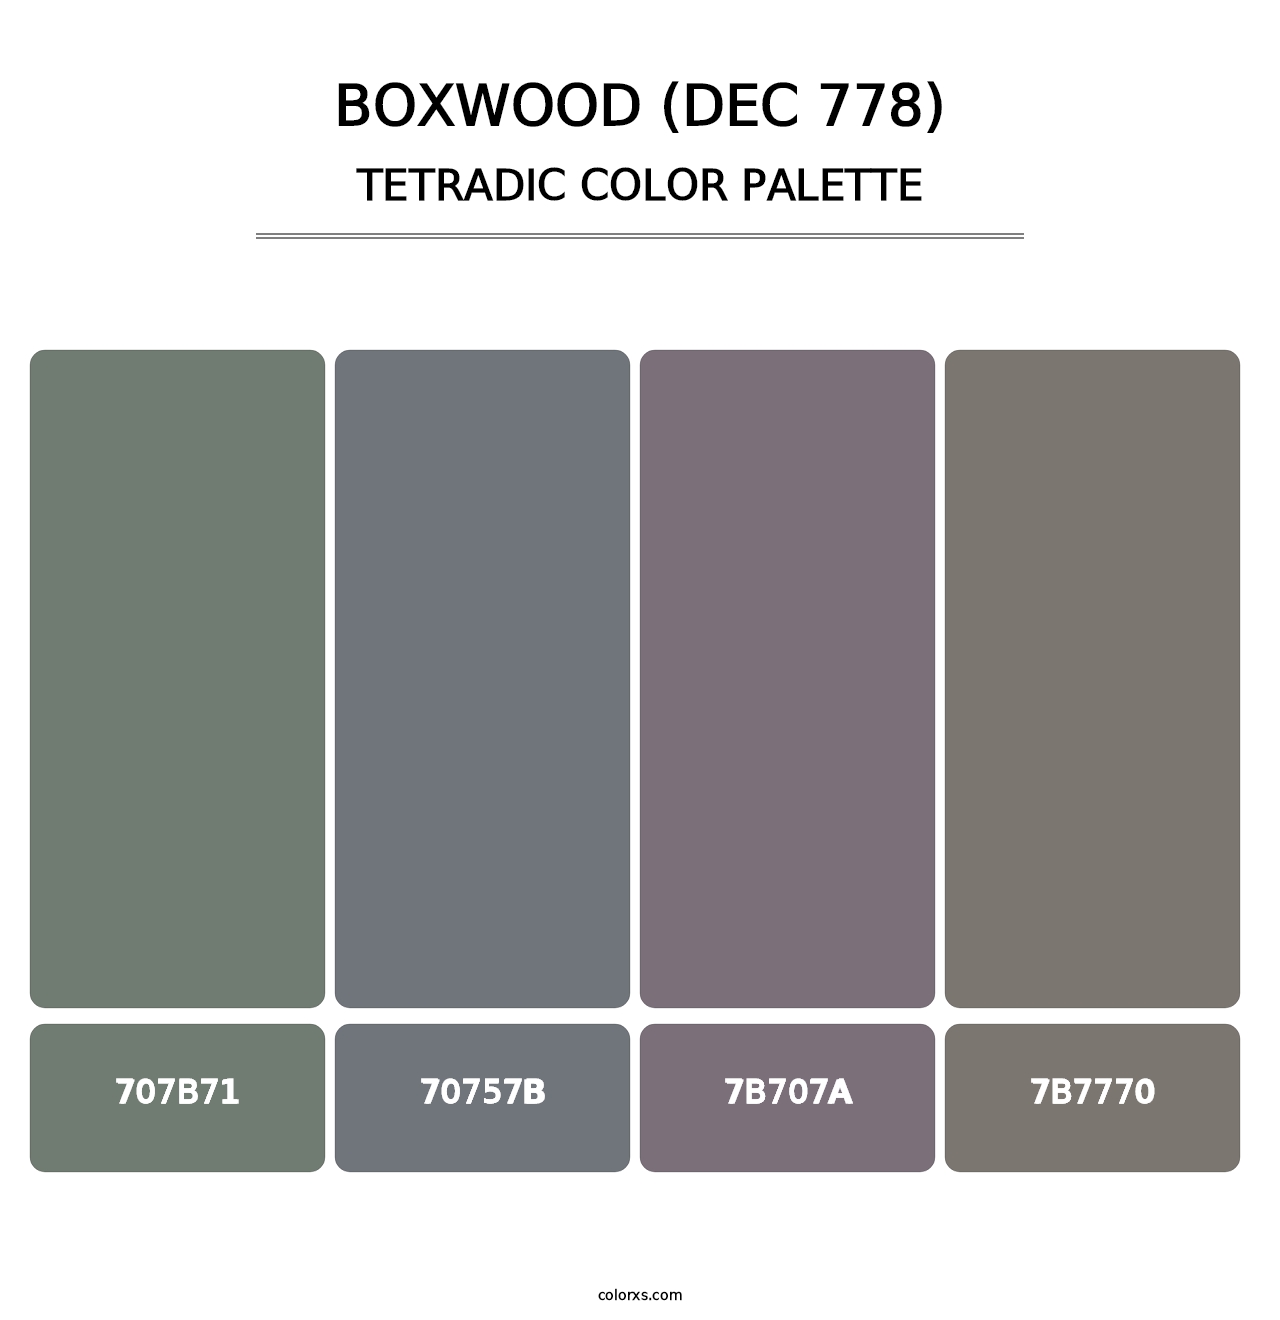 Boxwood (DEC 778) - Tetradic Color Palette